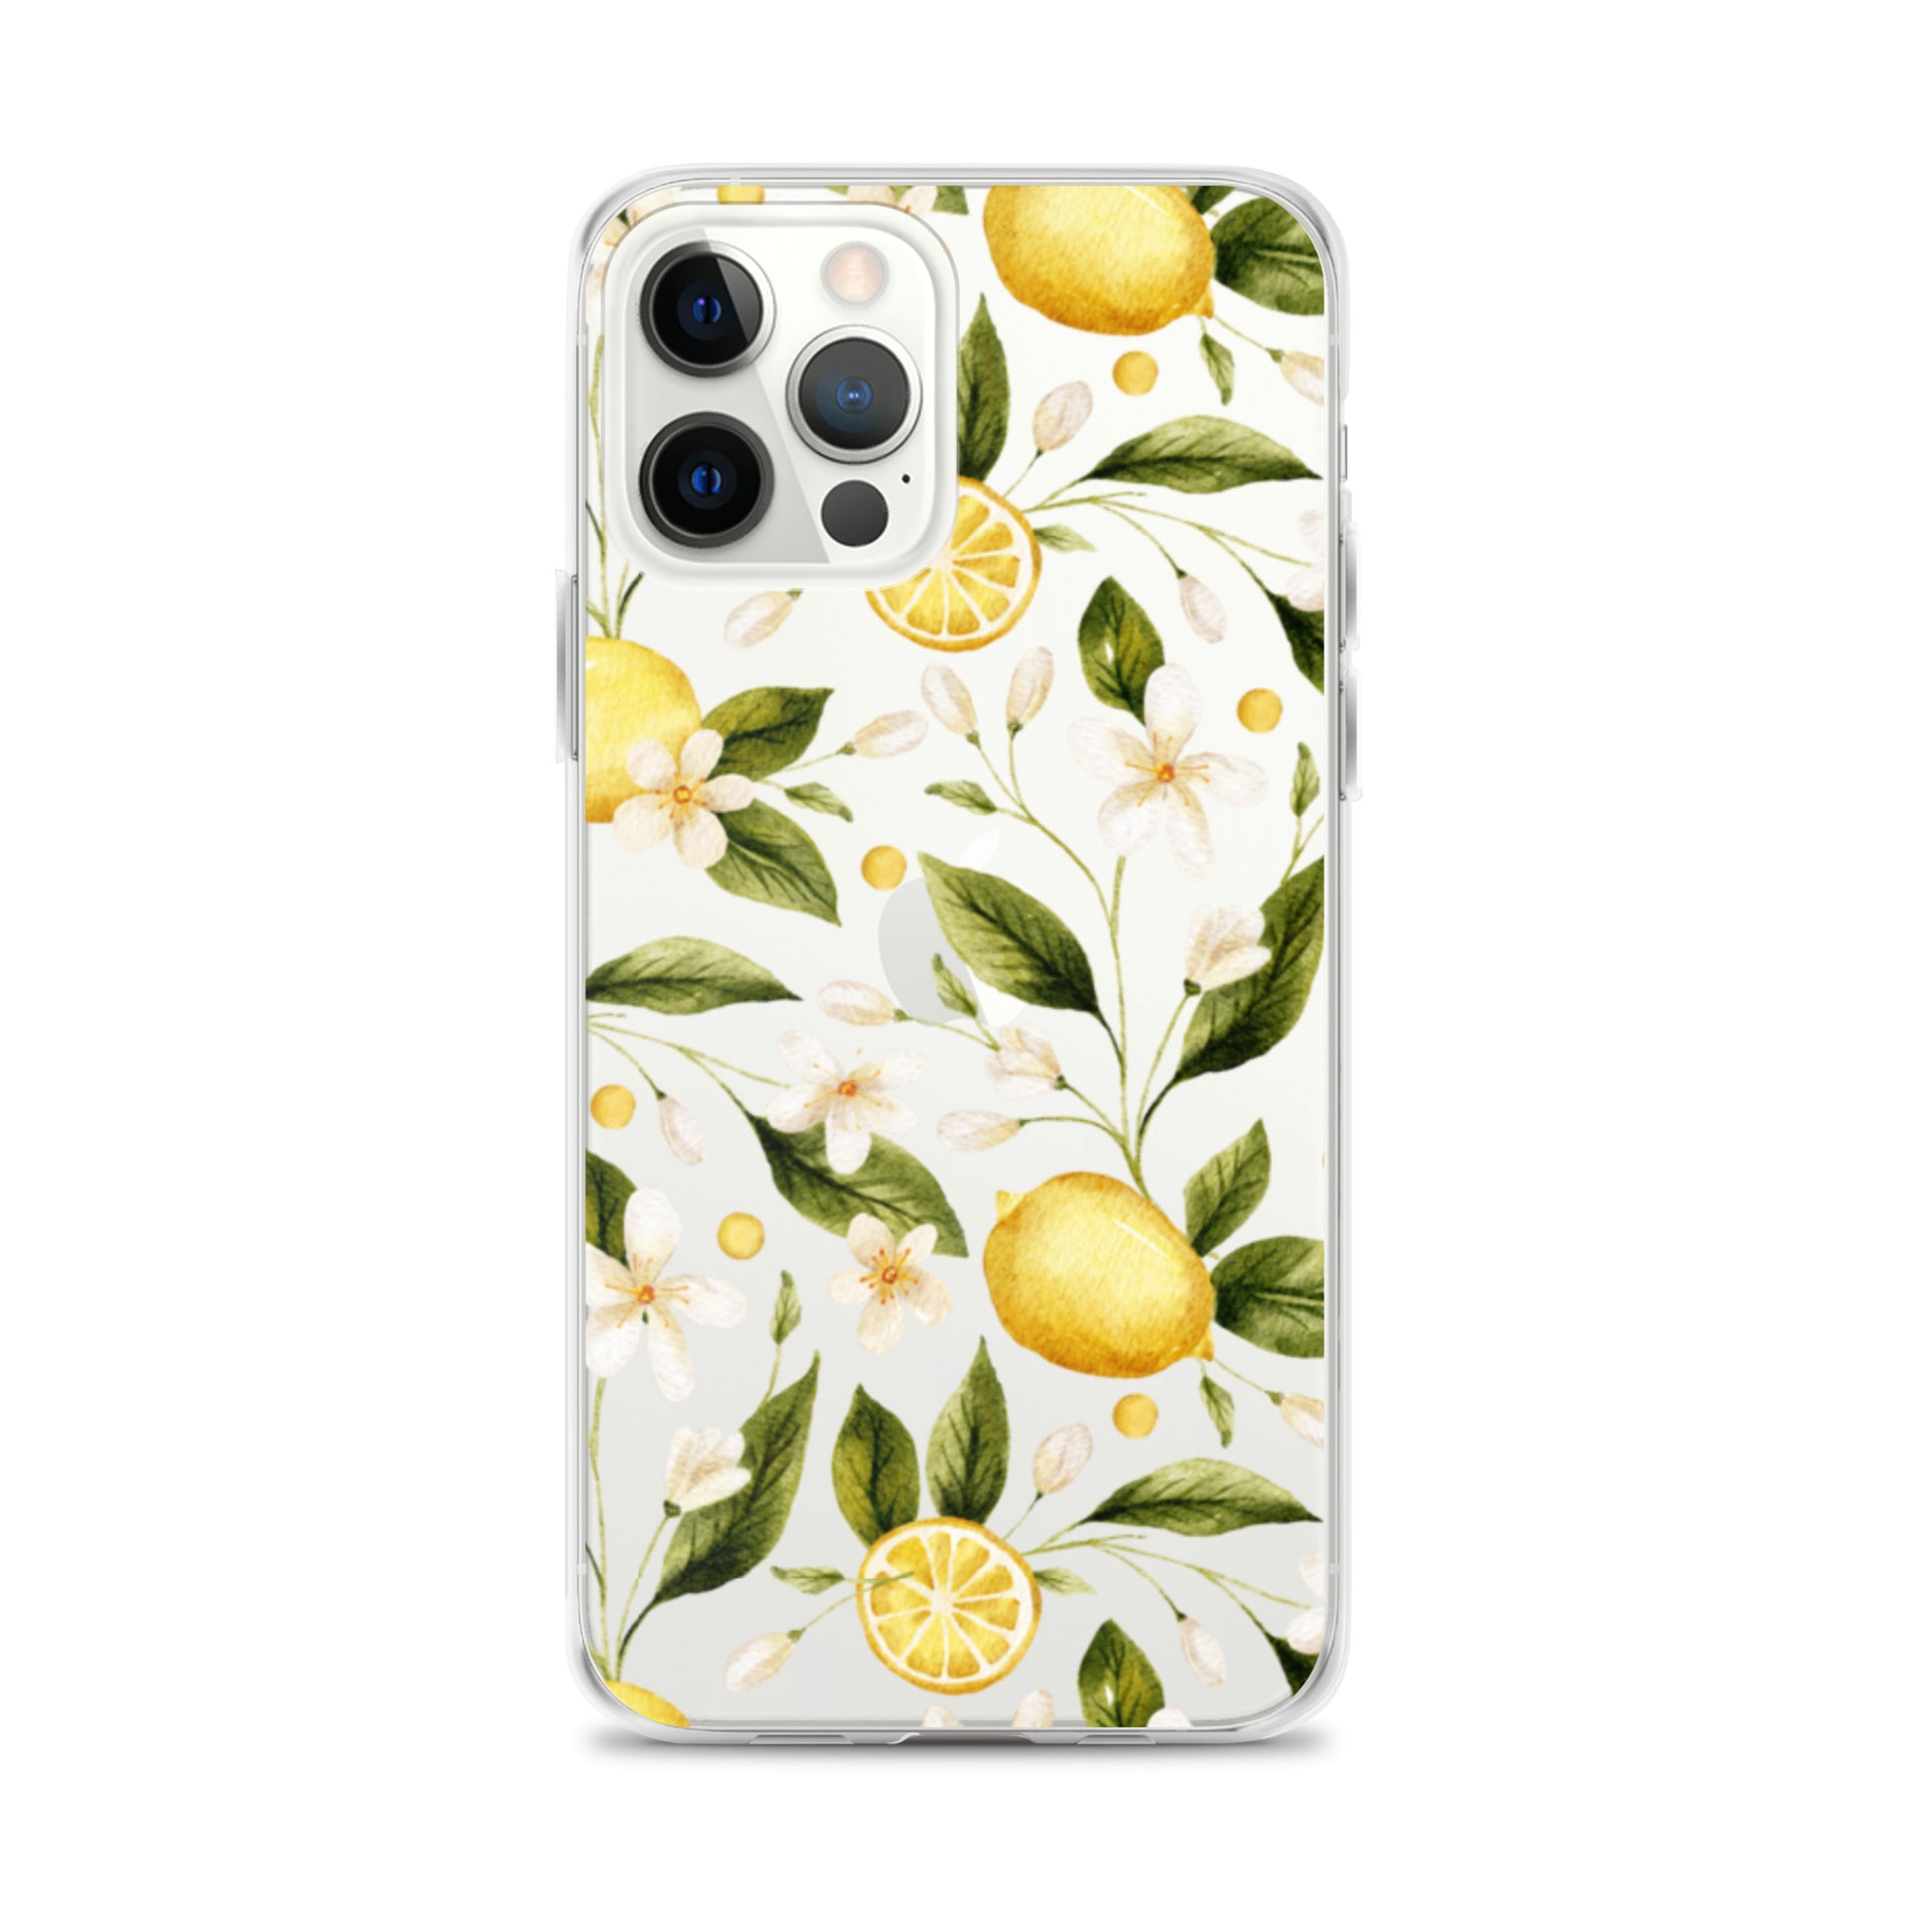 Lemon Garden Clear iPhone Case iPhone 12 Pro Max